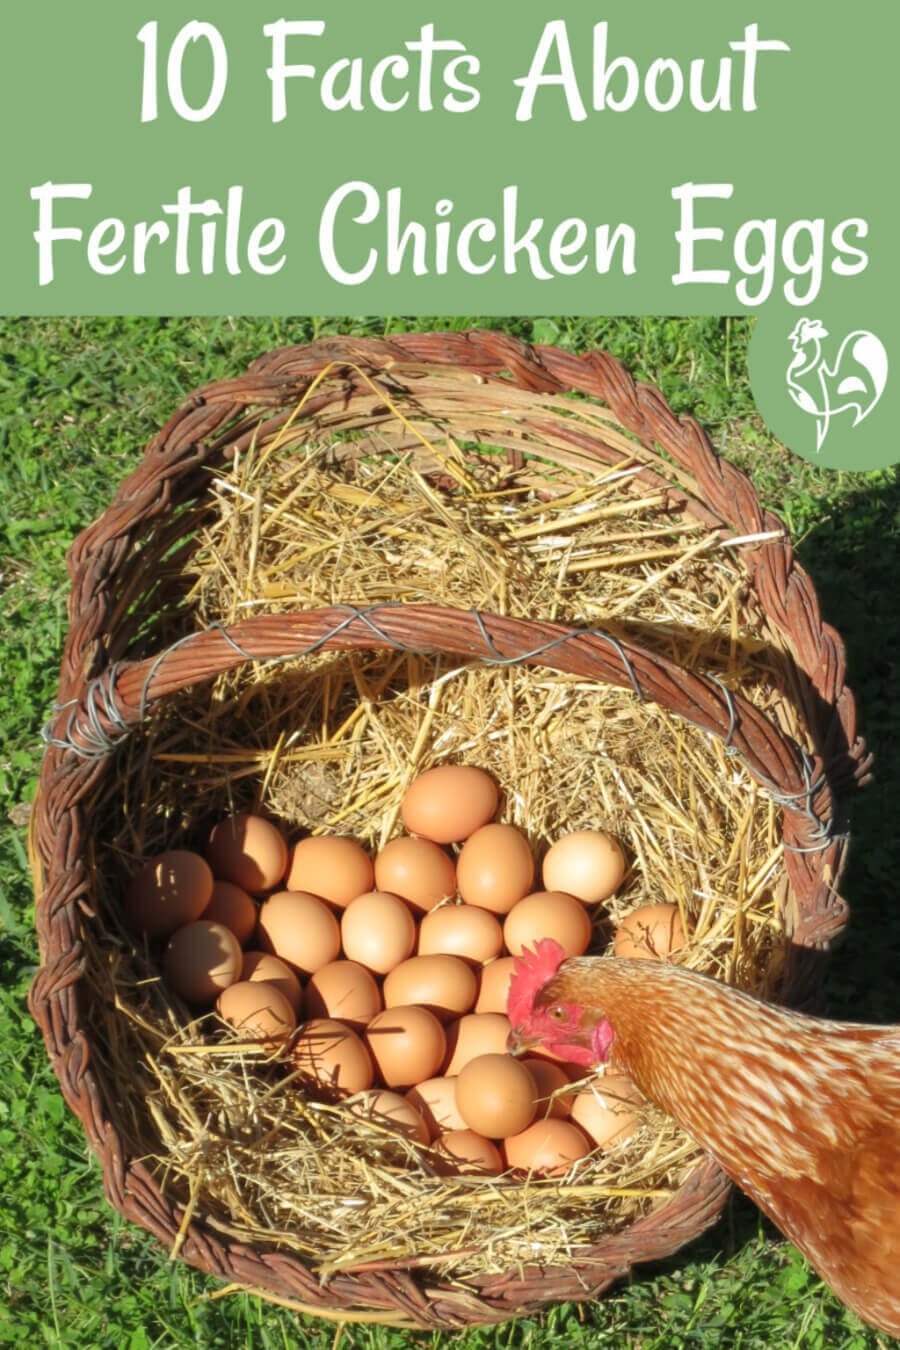 Fertile chicken hatching eggs 